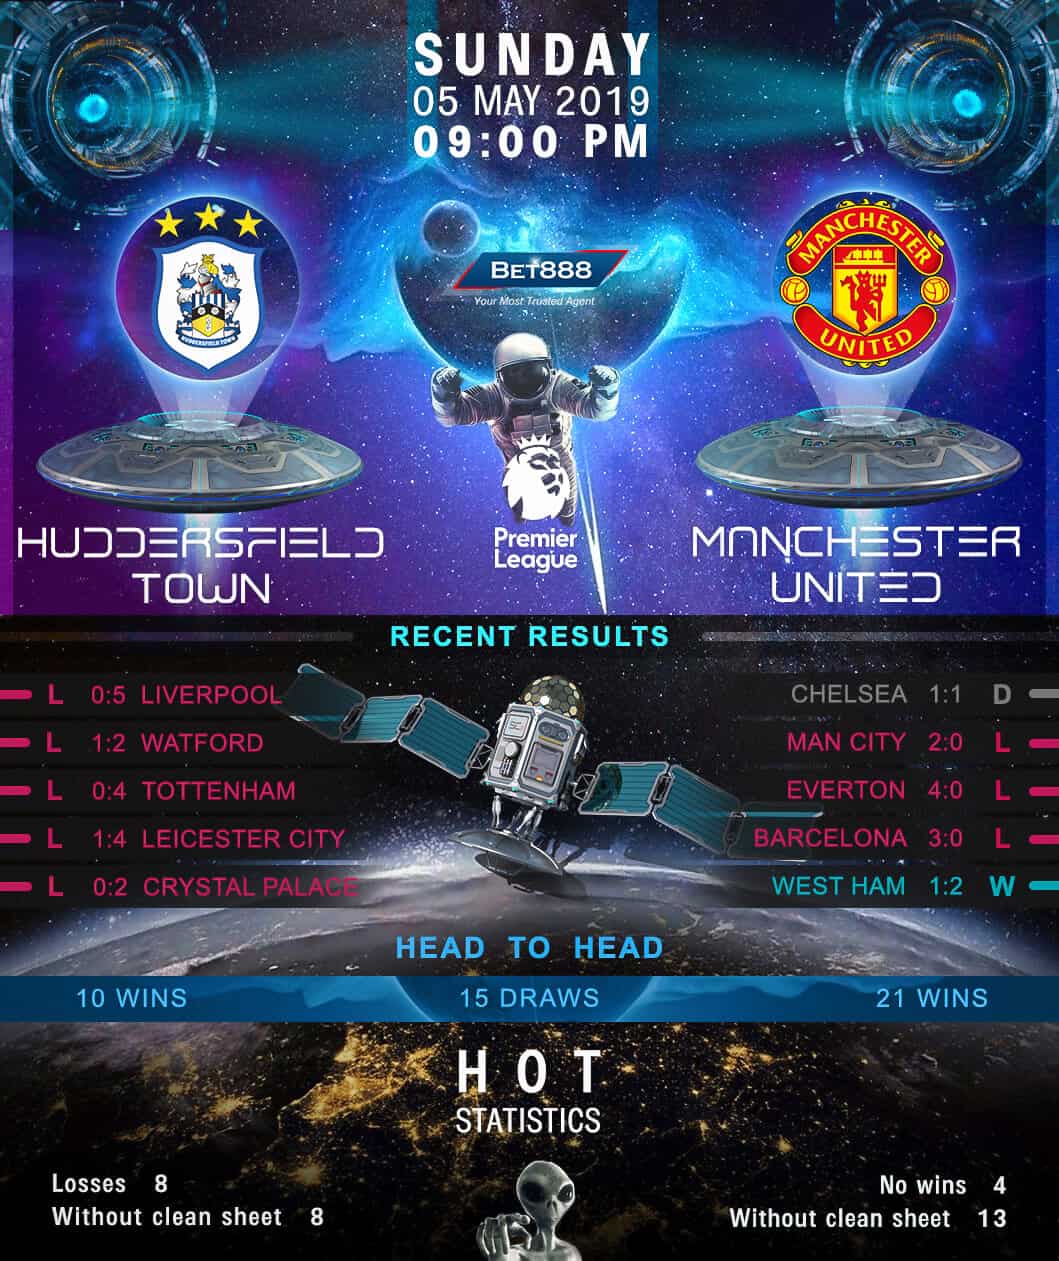 Huddersfield Town vs Manchester United 05/05/19